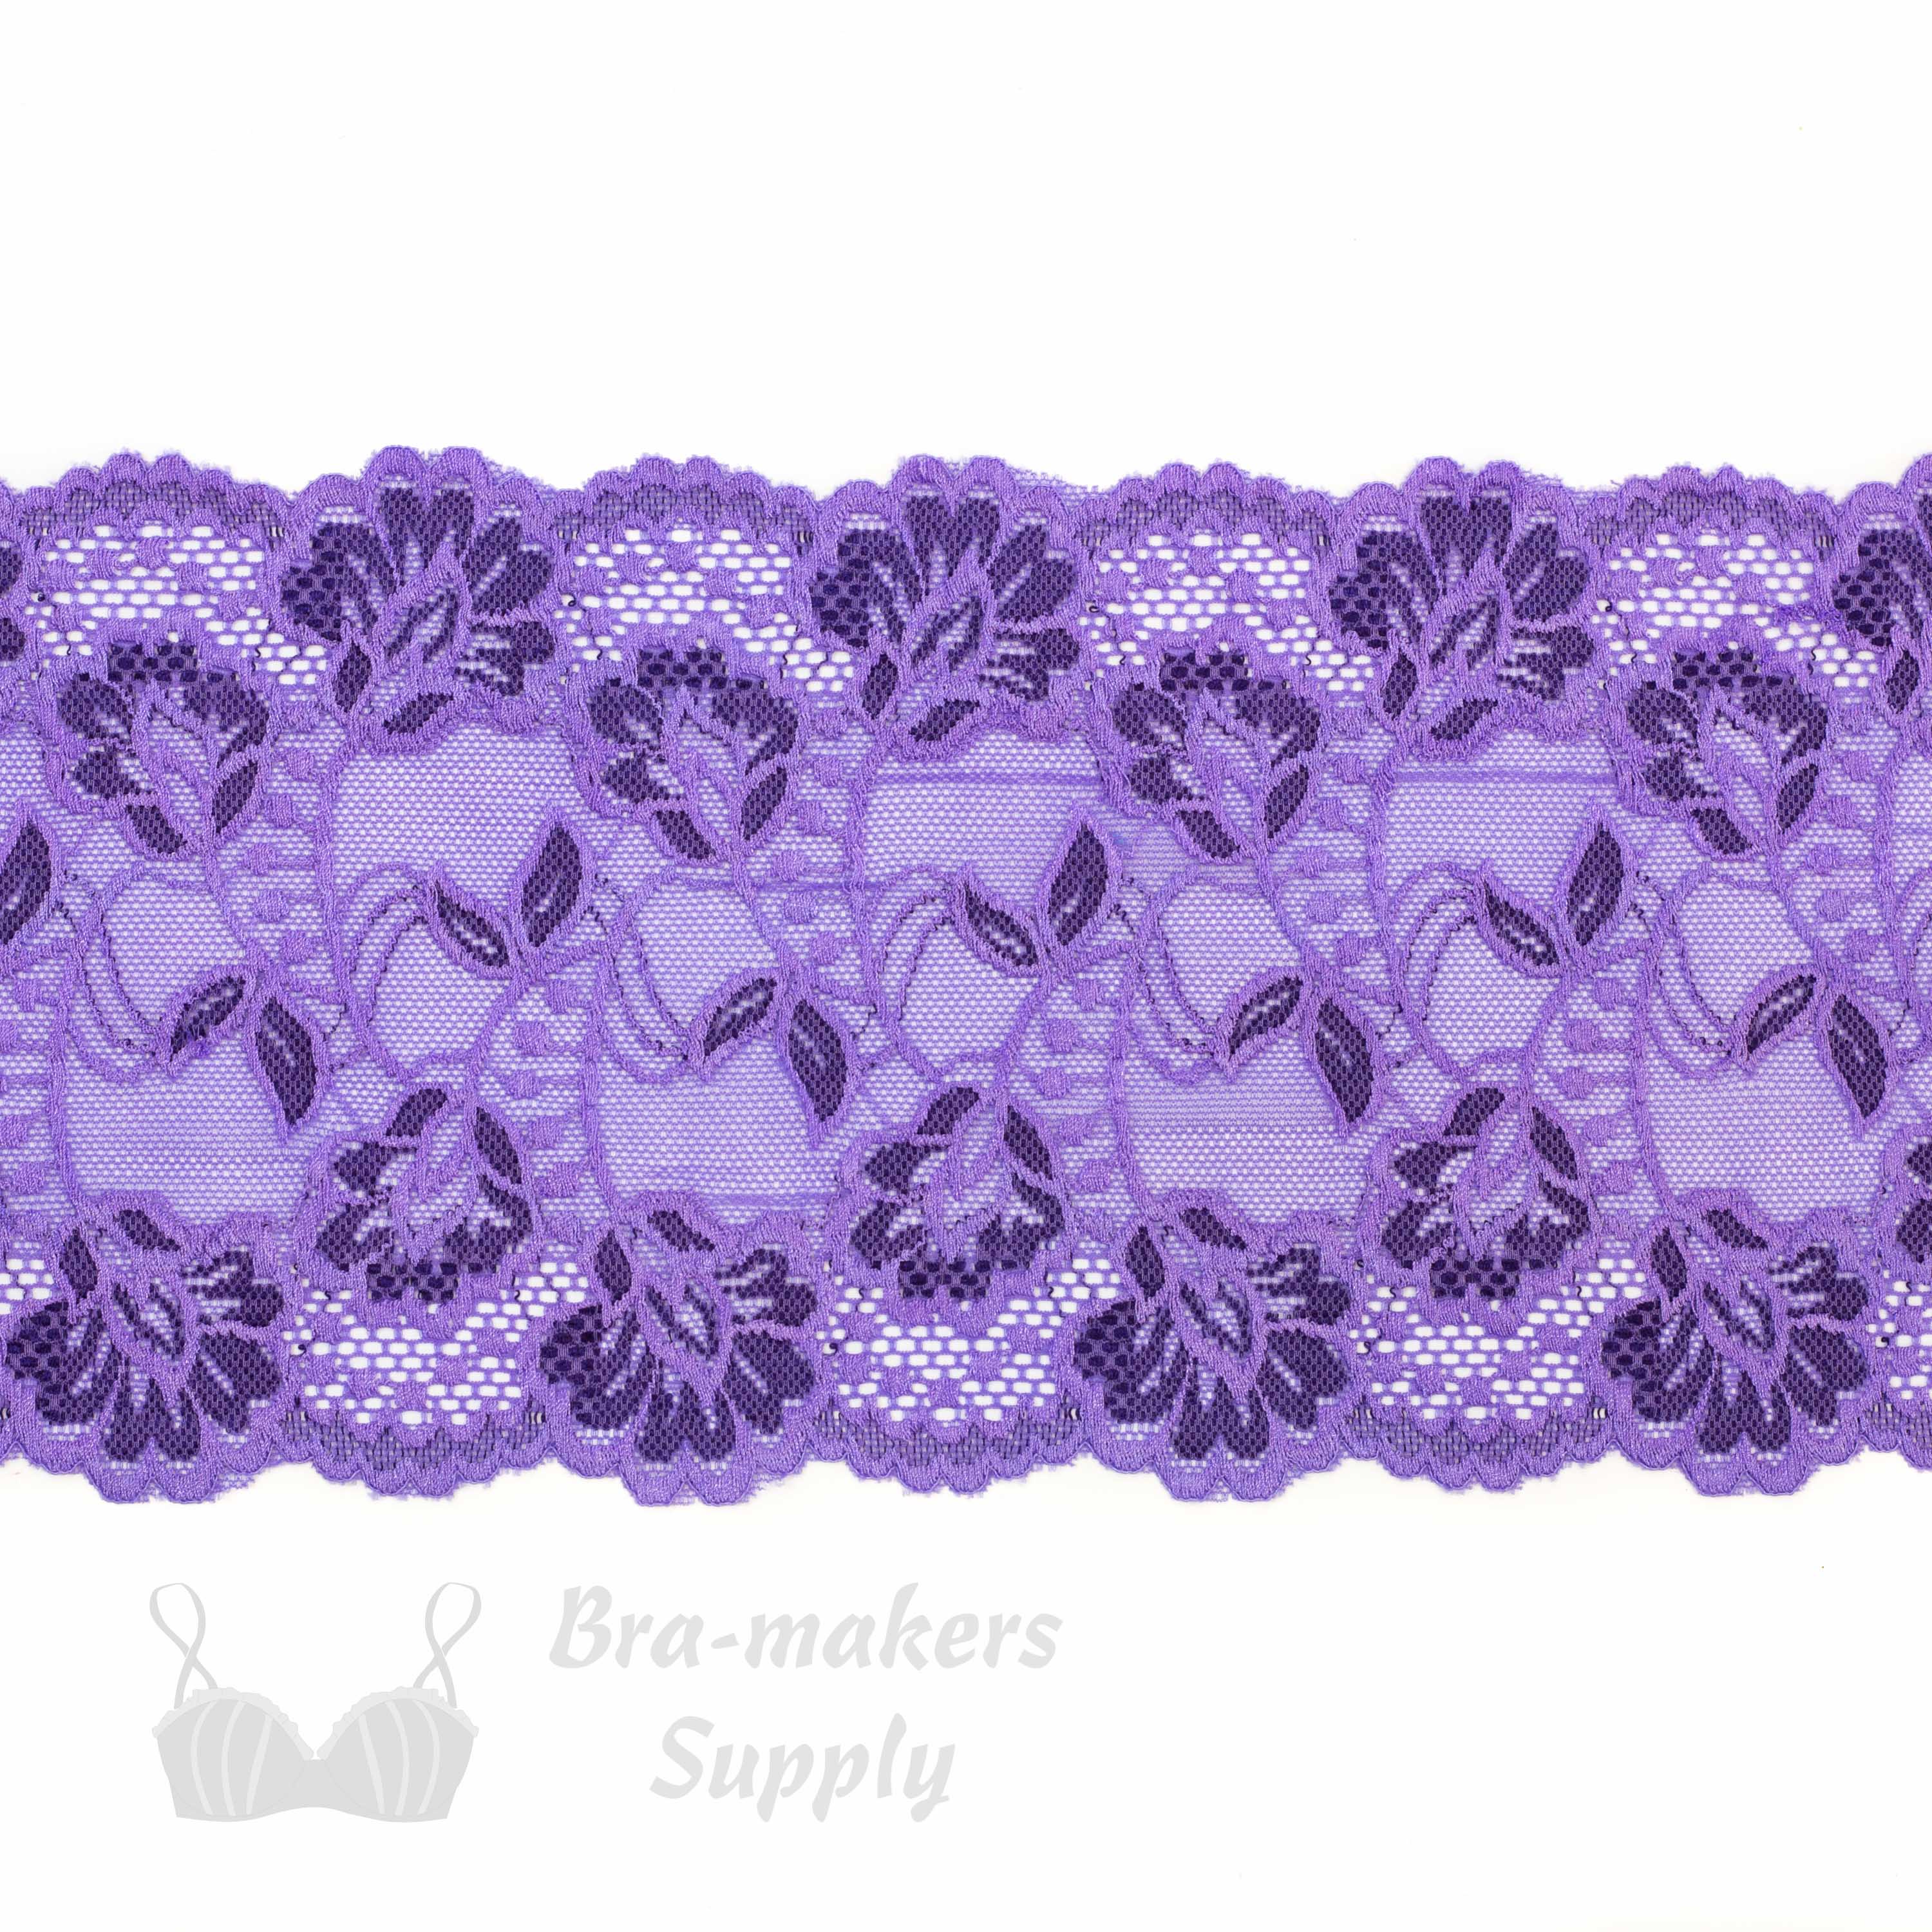 Bluebella Catalina Floral-lace Stretch-mesh Bra in Purple